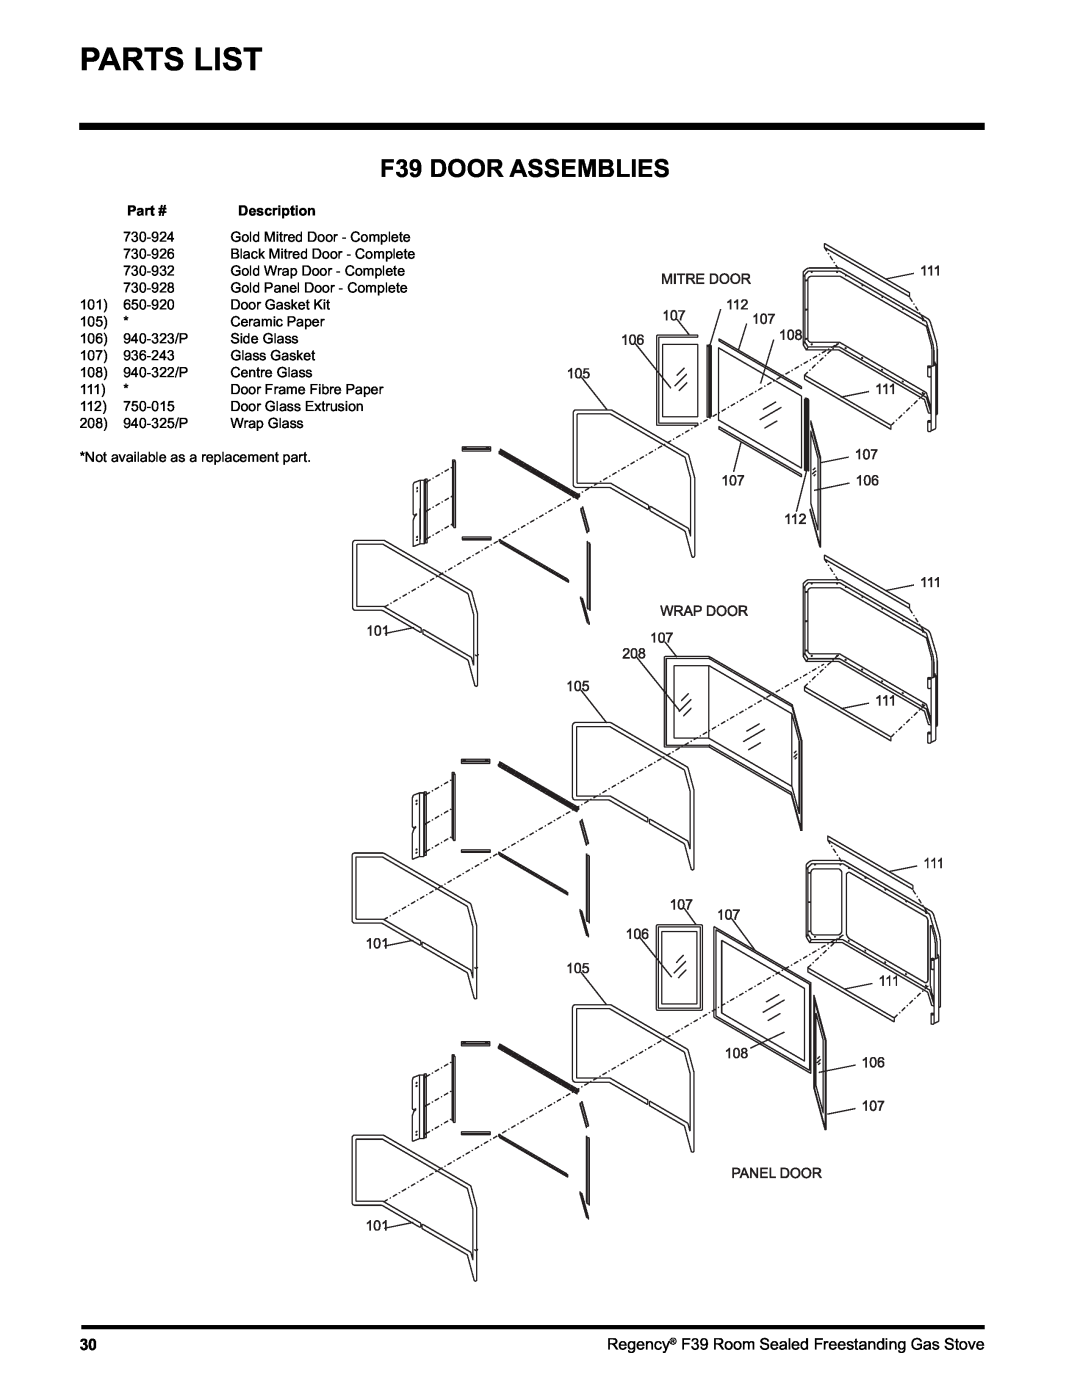 Regency F39-NG, F39-LPG installation manual F39 DOOR ASSEMBLIES, Parts List, Description 